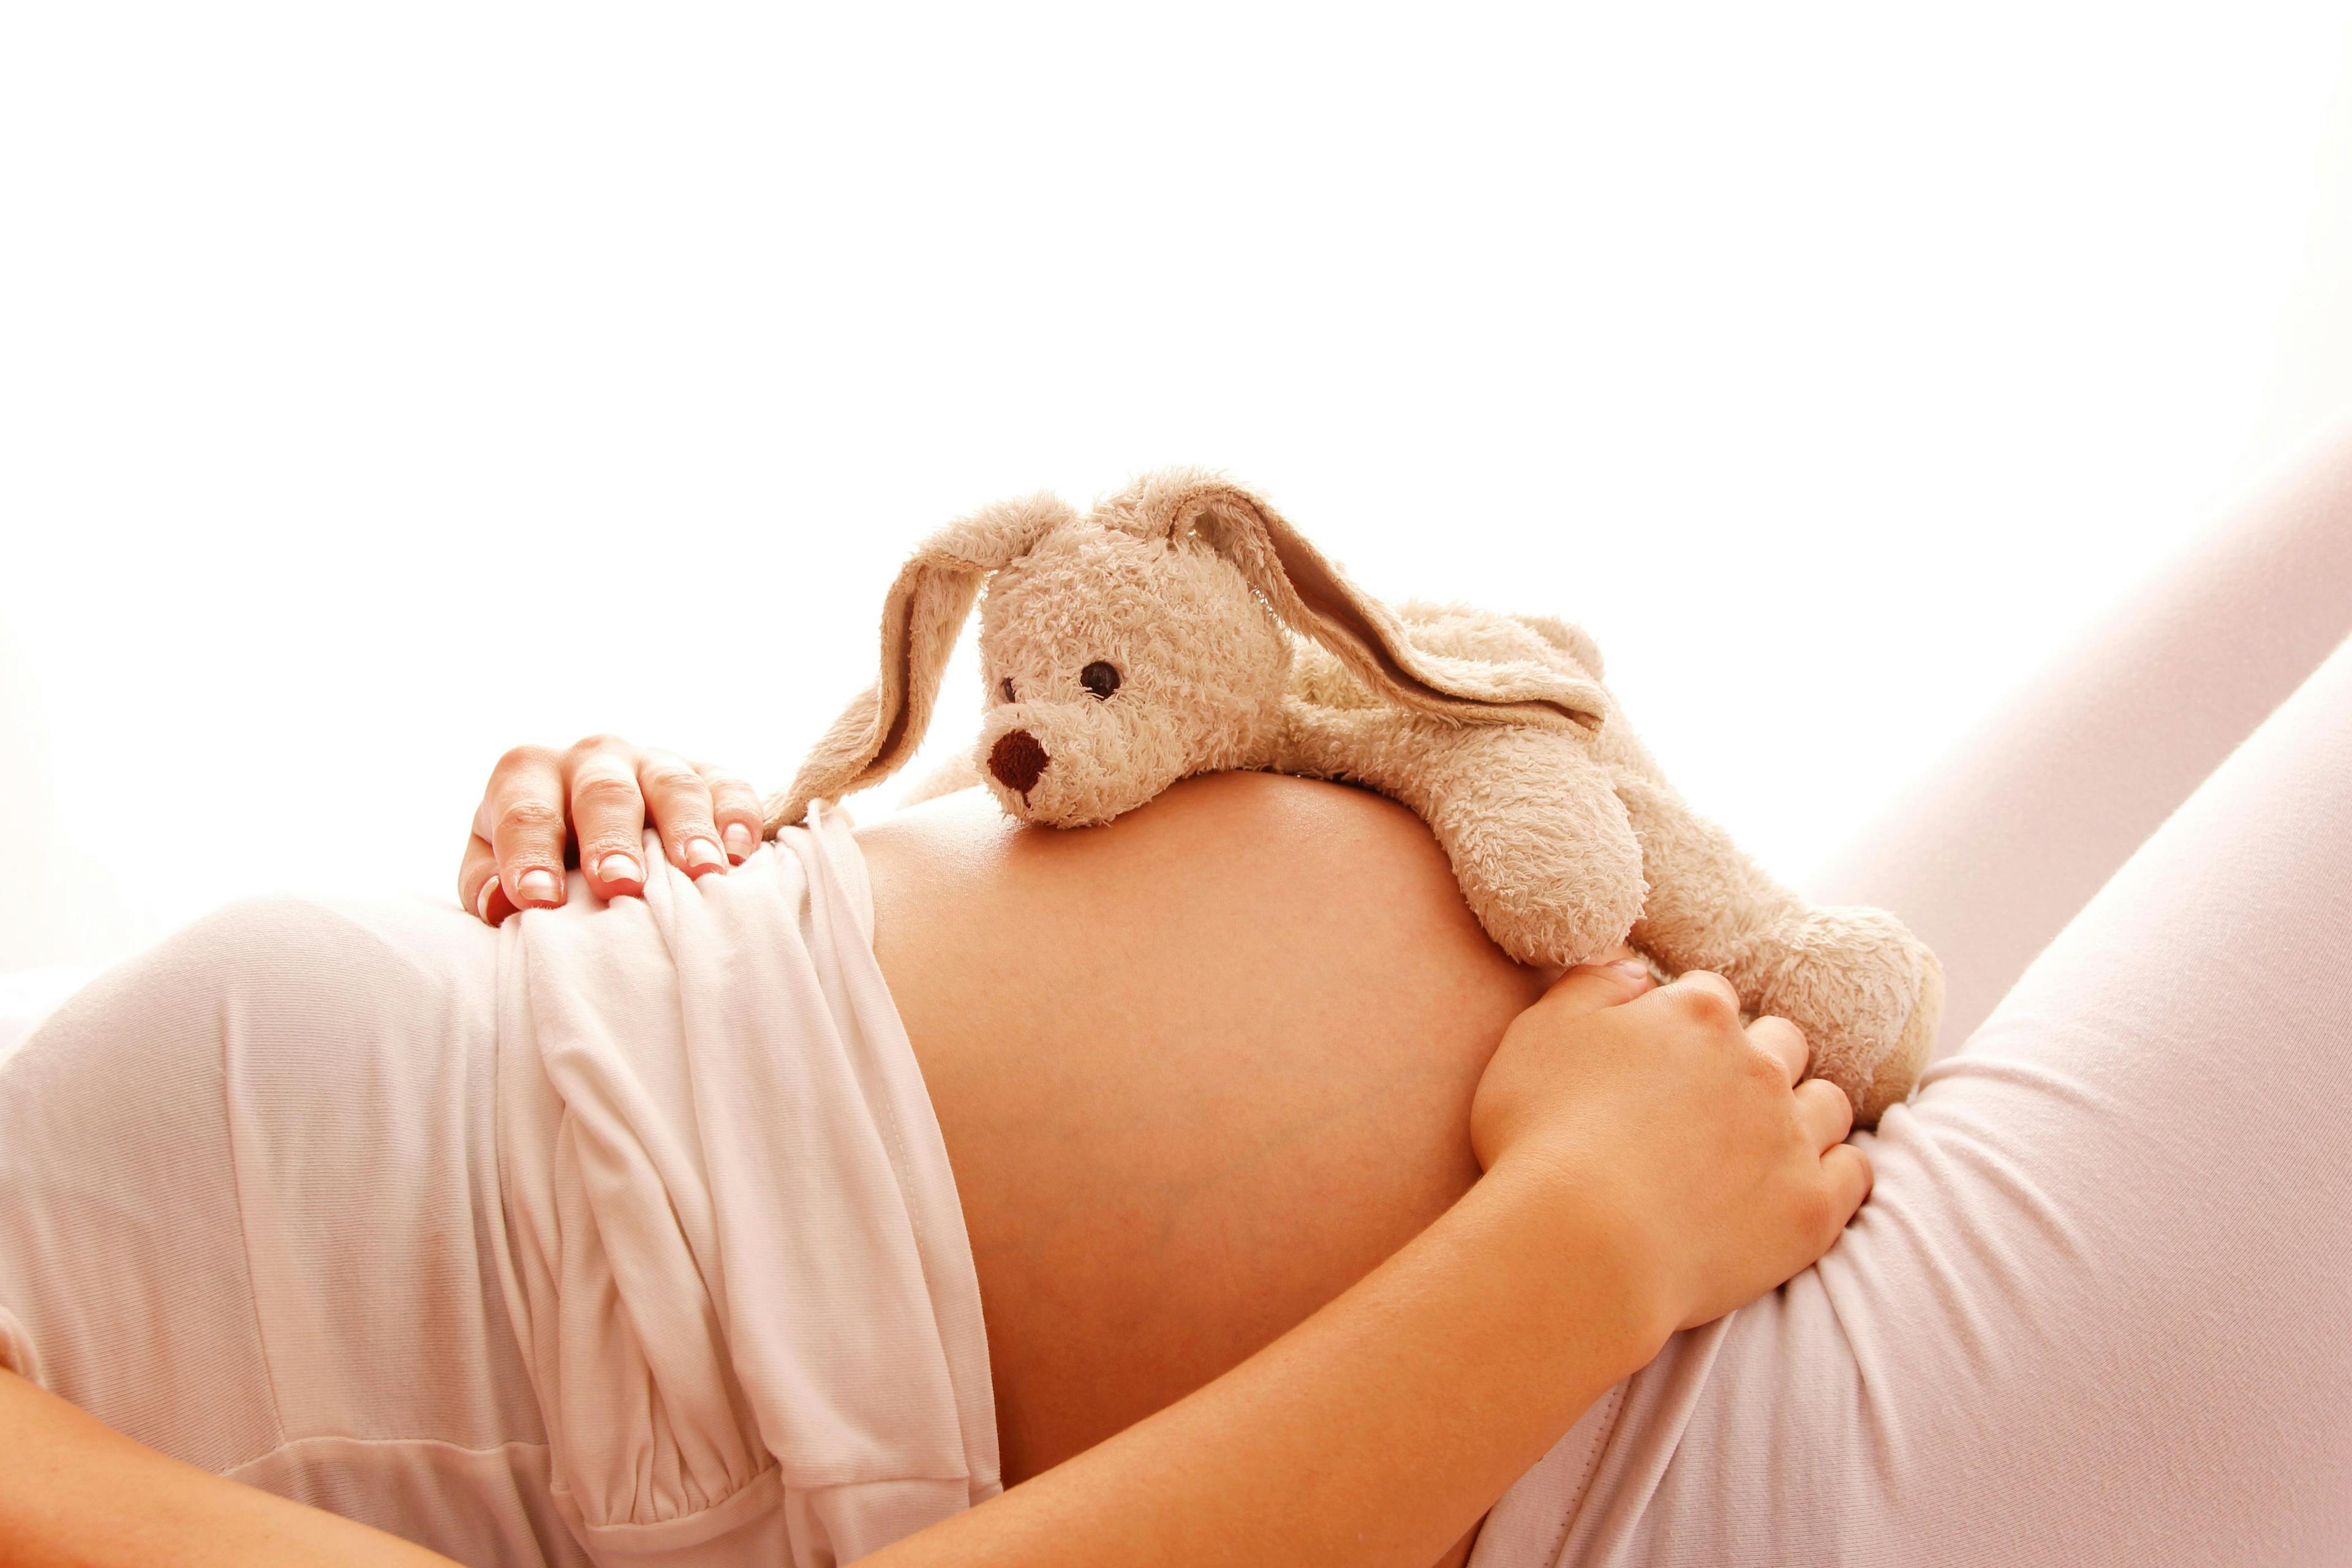 pregnant woman with stuffed animal | Image credit:  Kostia - stock.adobe.com